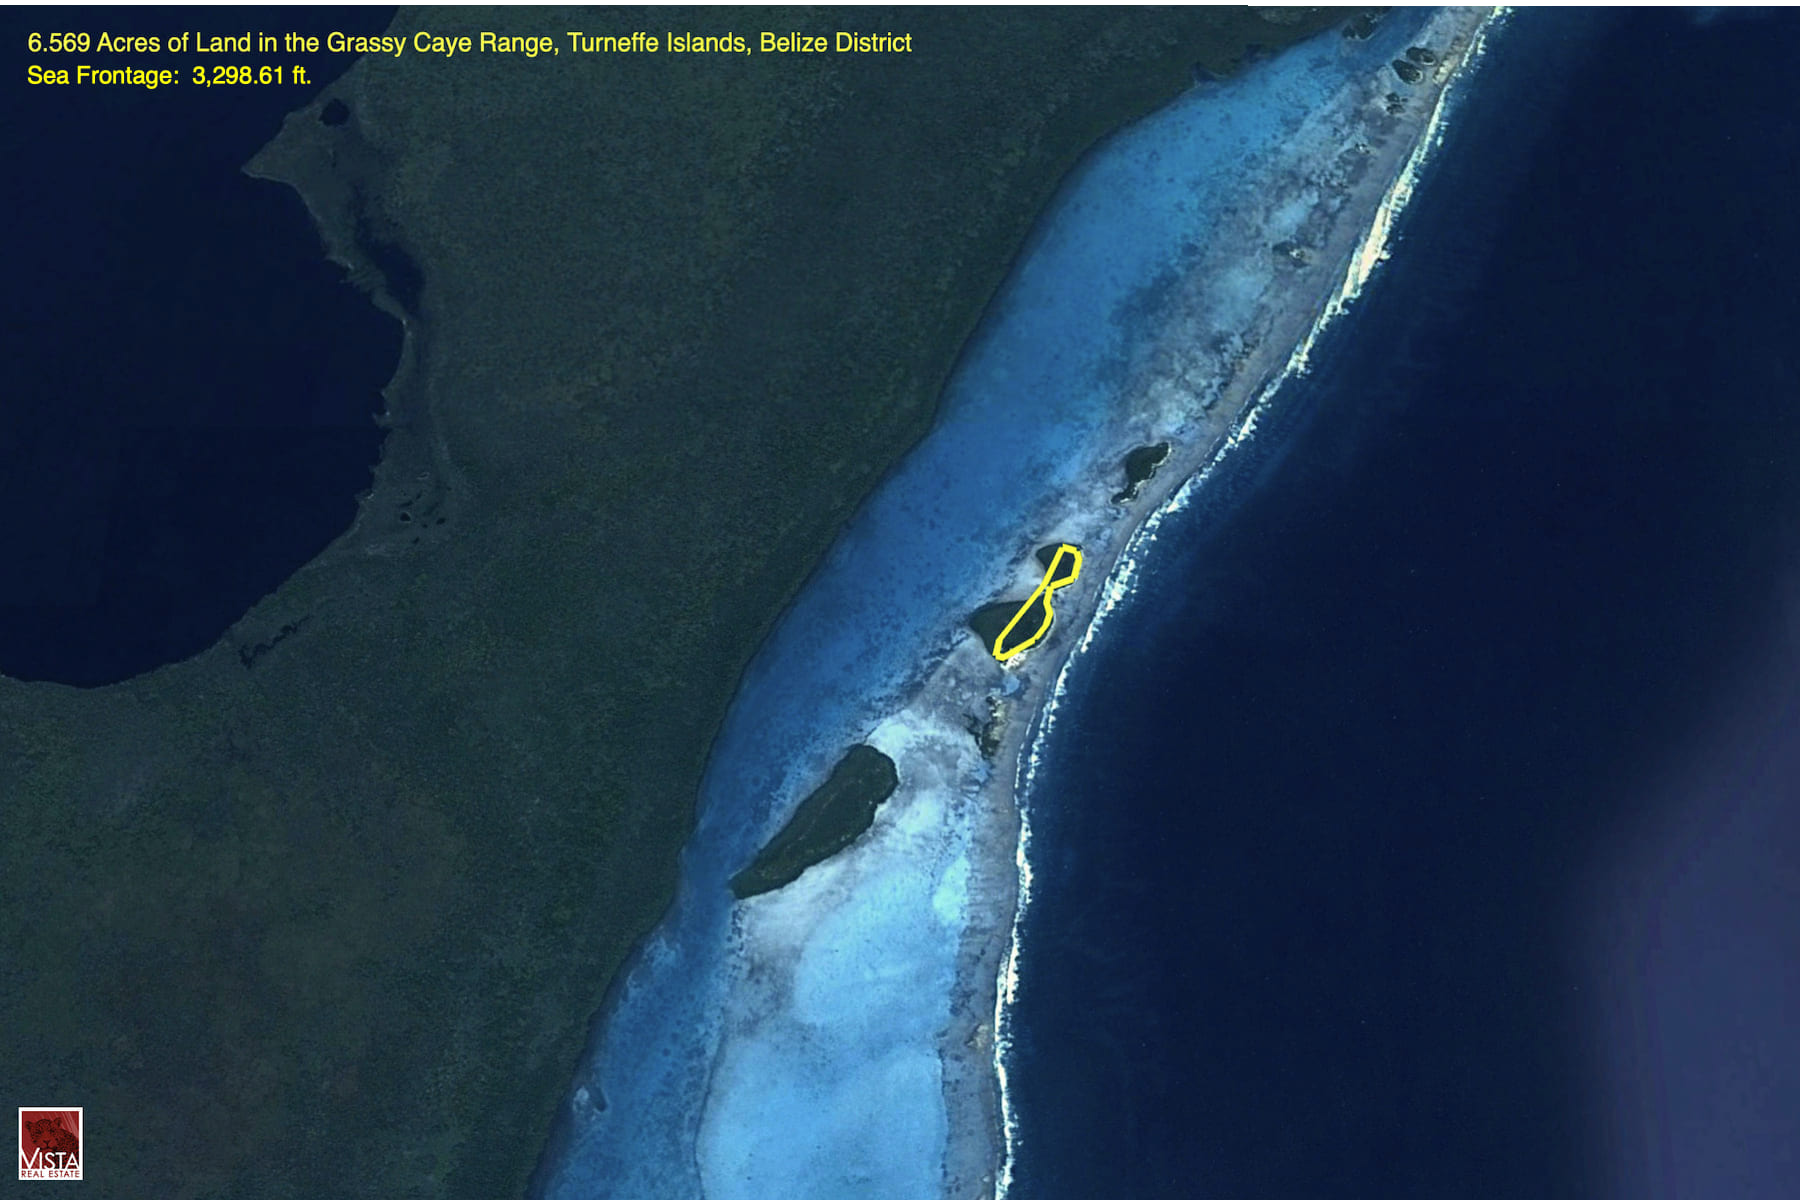 6.5 Acre Private Island on the Turneffe Atoll Rim in the Grassy Caye Range